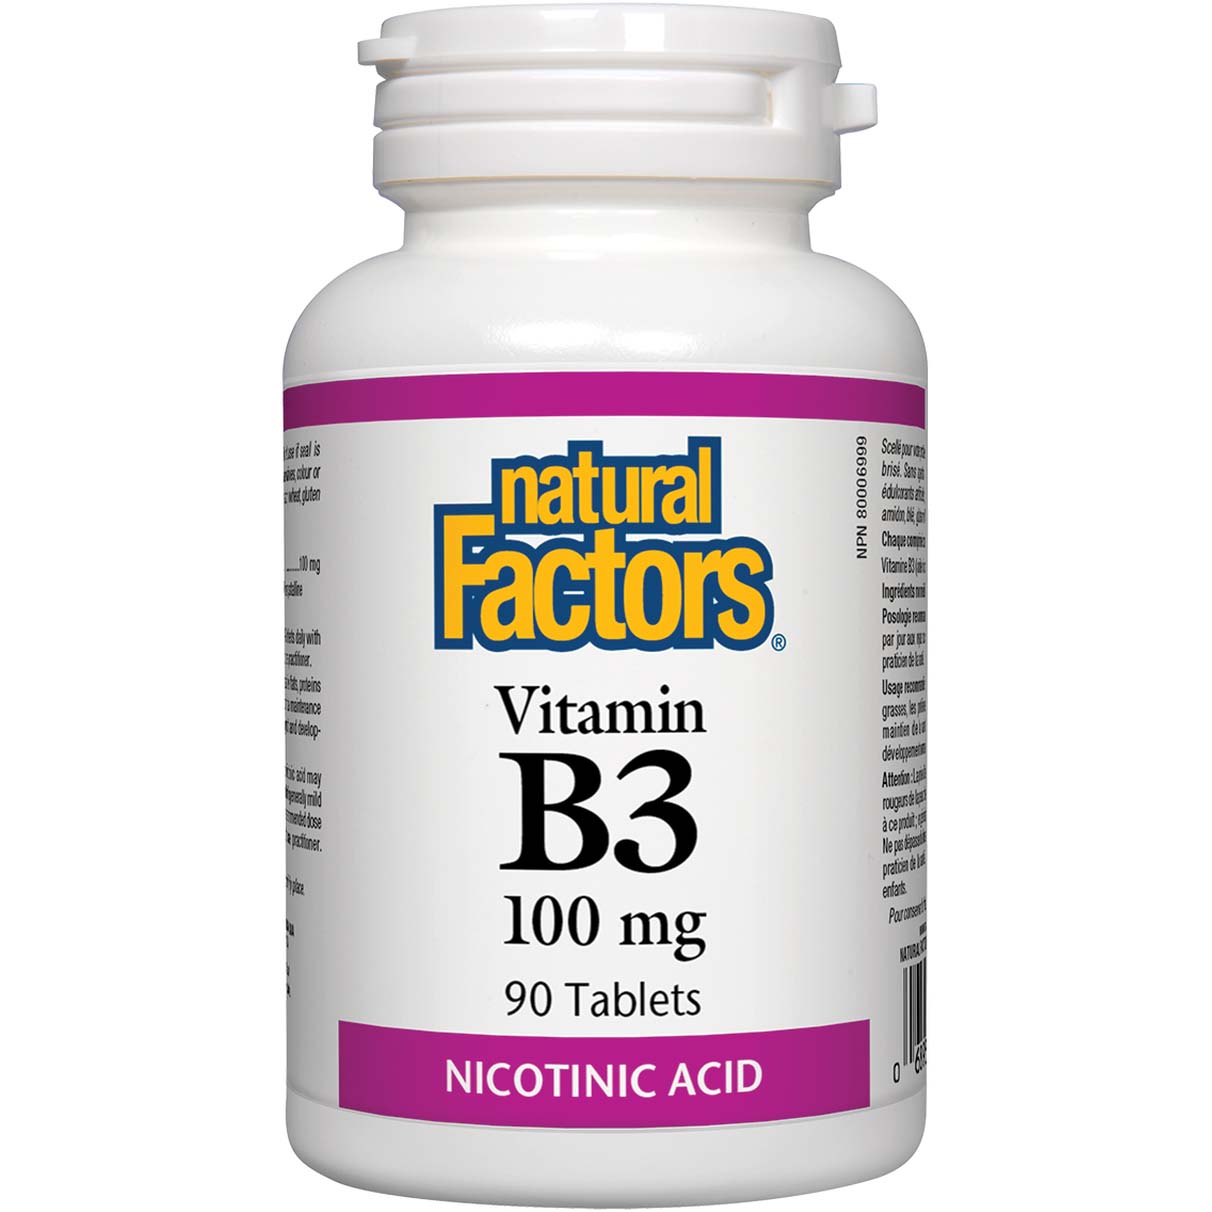 Natural Factors Vitamin B3, 100 mg, 90 Tablets